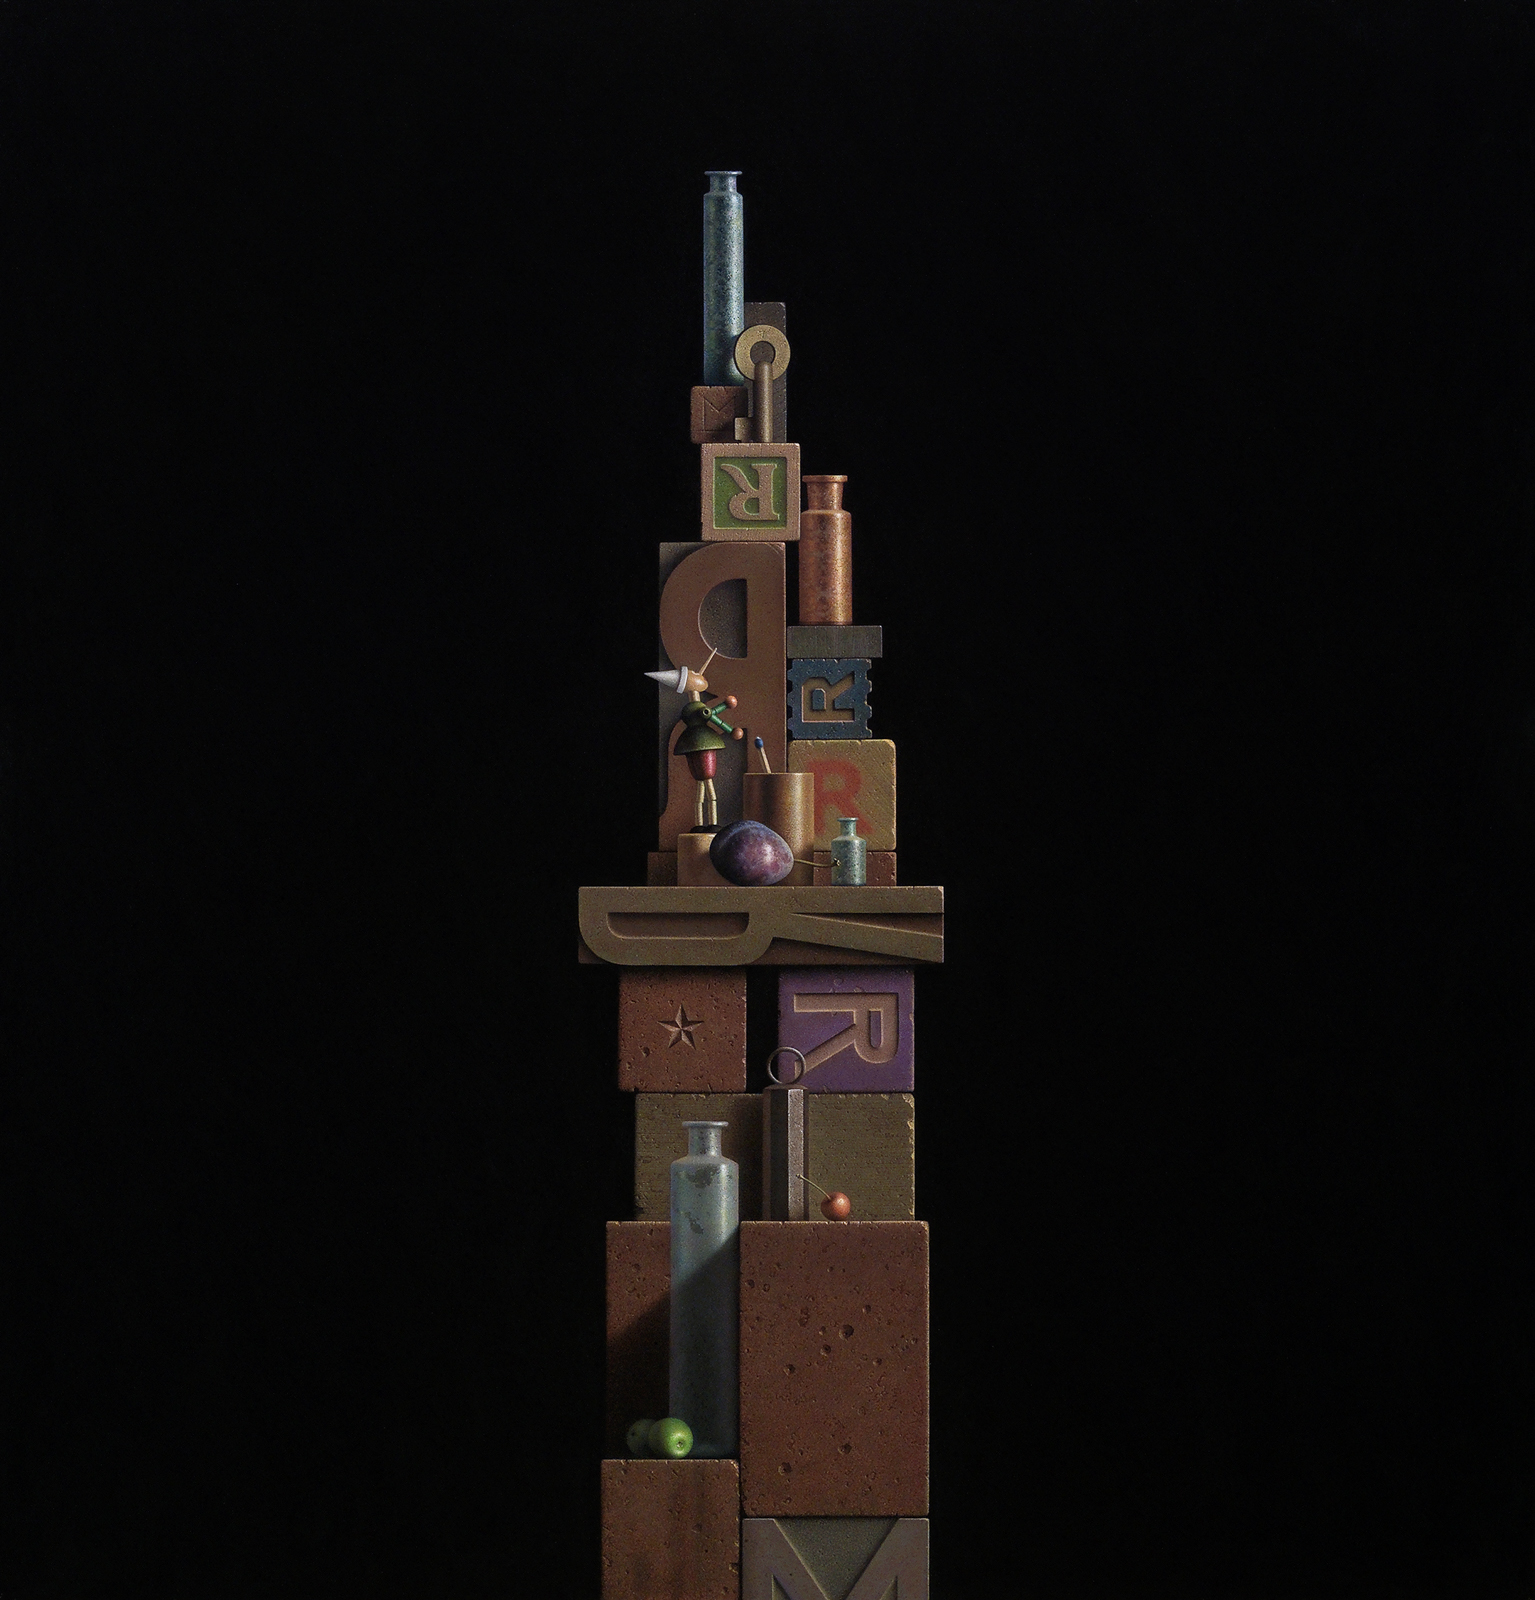 G. Daniel Massad, Six Wooden Blocks, 2007, pastel on paper, 24 x 23½ inches. Private collection. © G. Daniel Massad